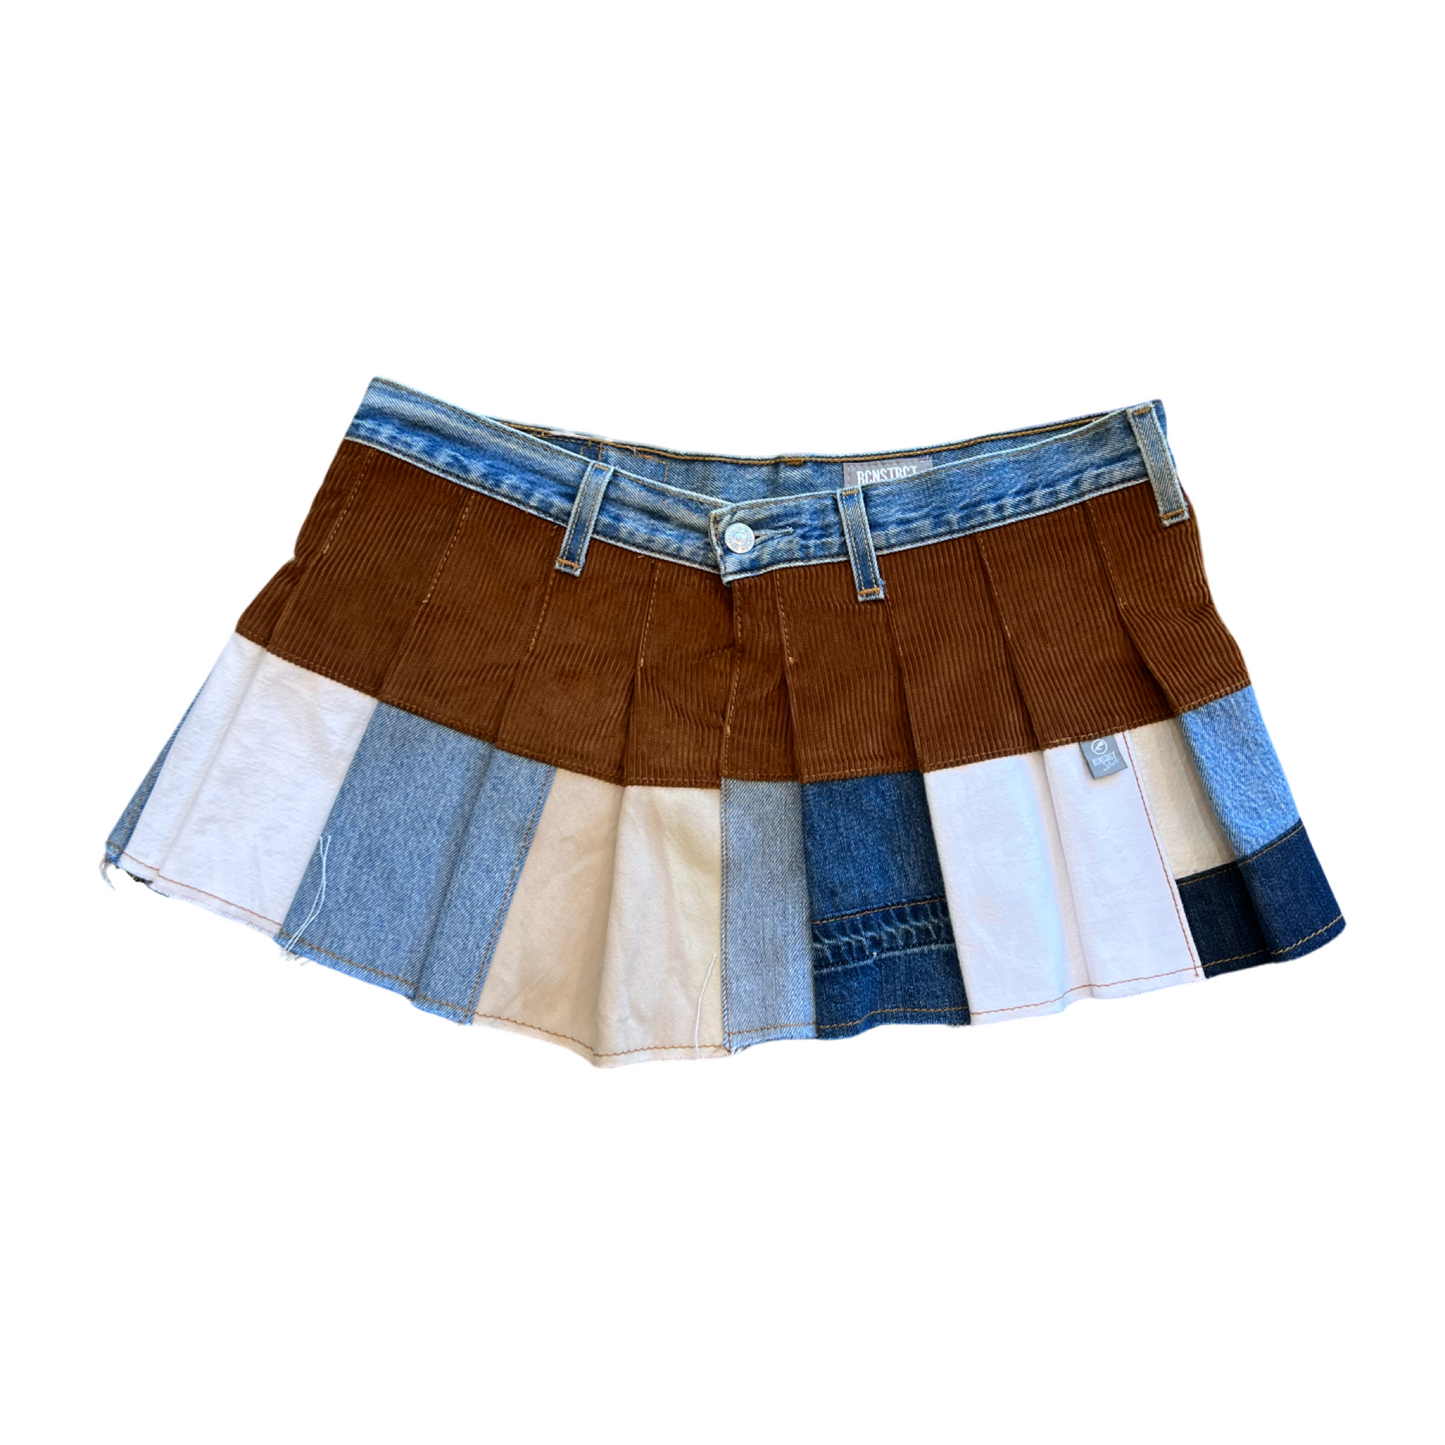 Multi Tonal Corduroy Skirt